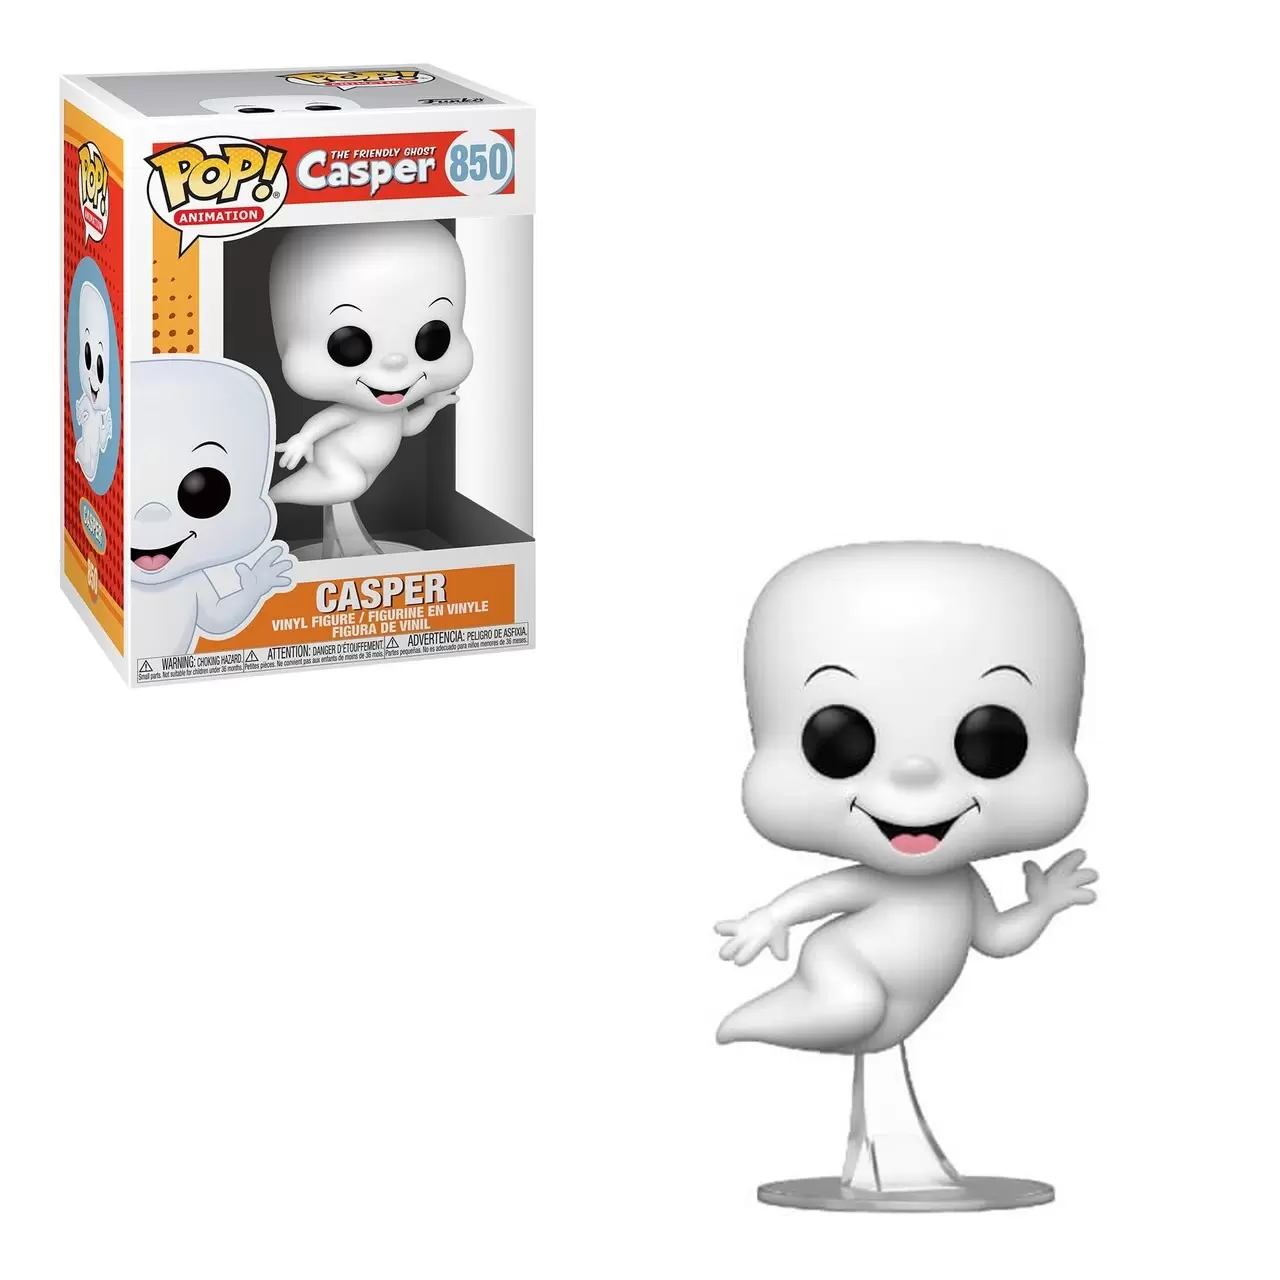 POP! Animation - The Friendly Ghost Casper - Casper